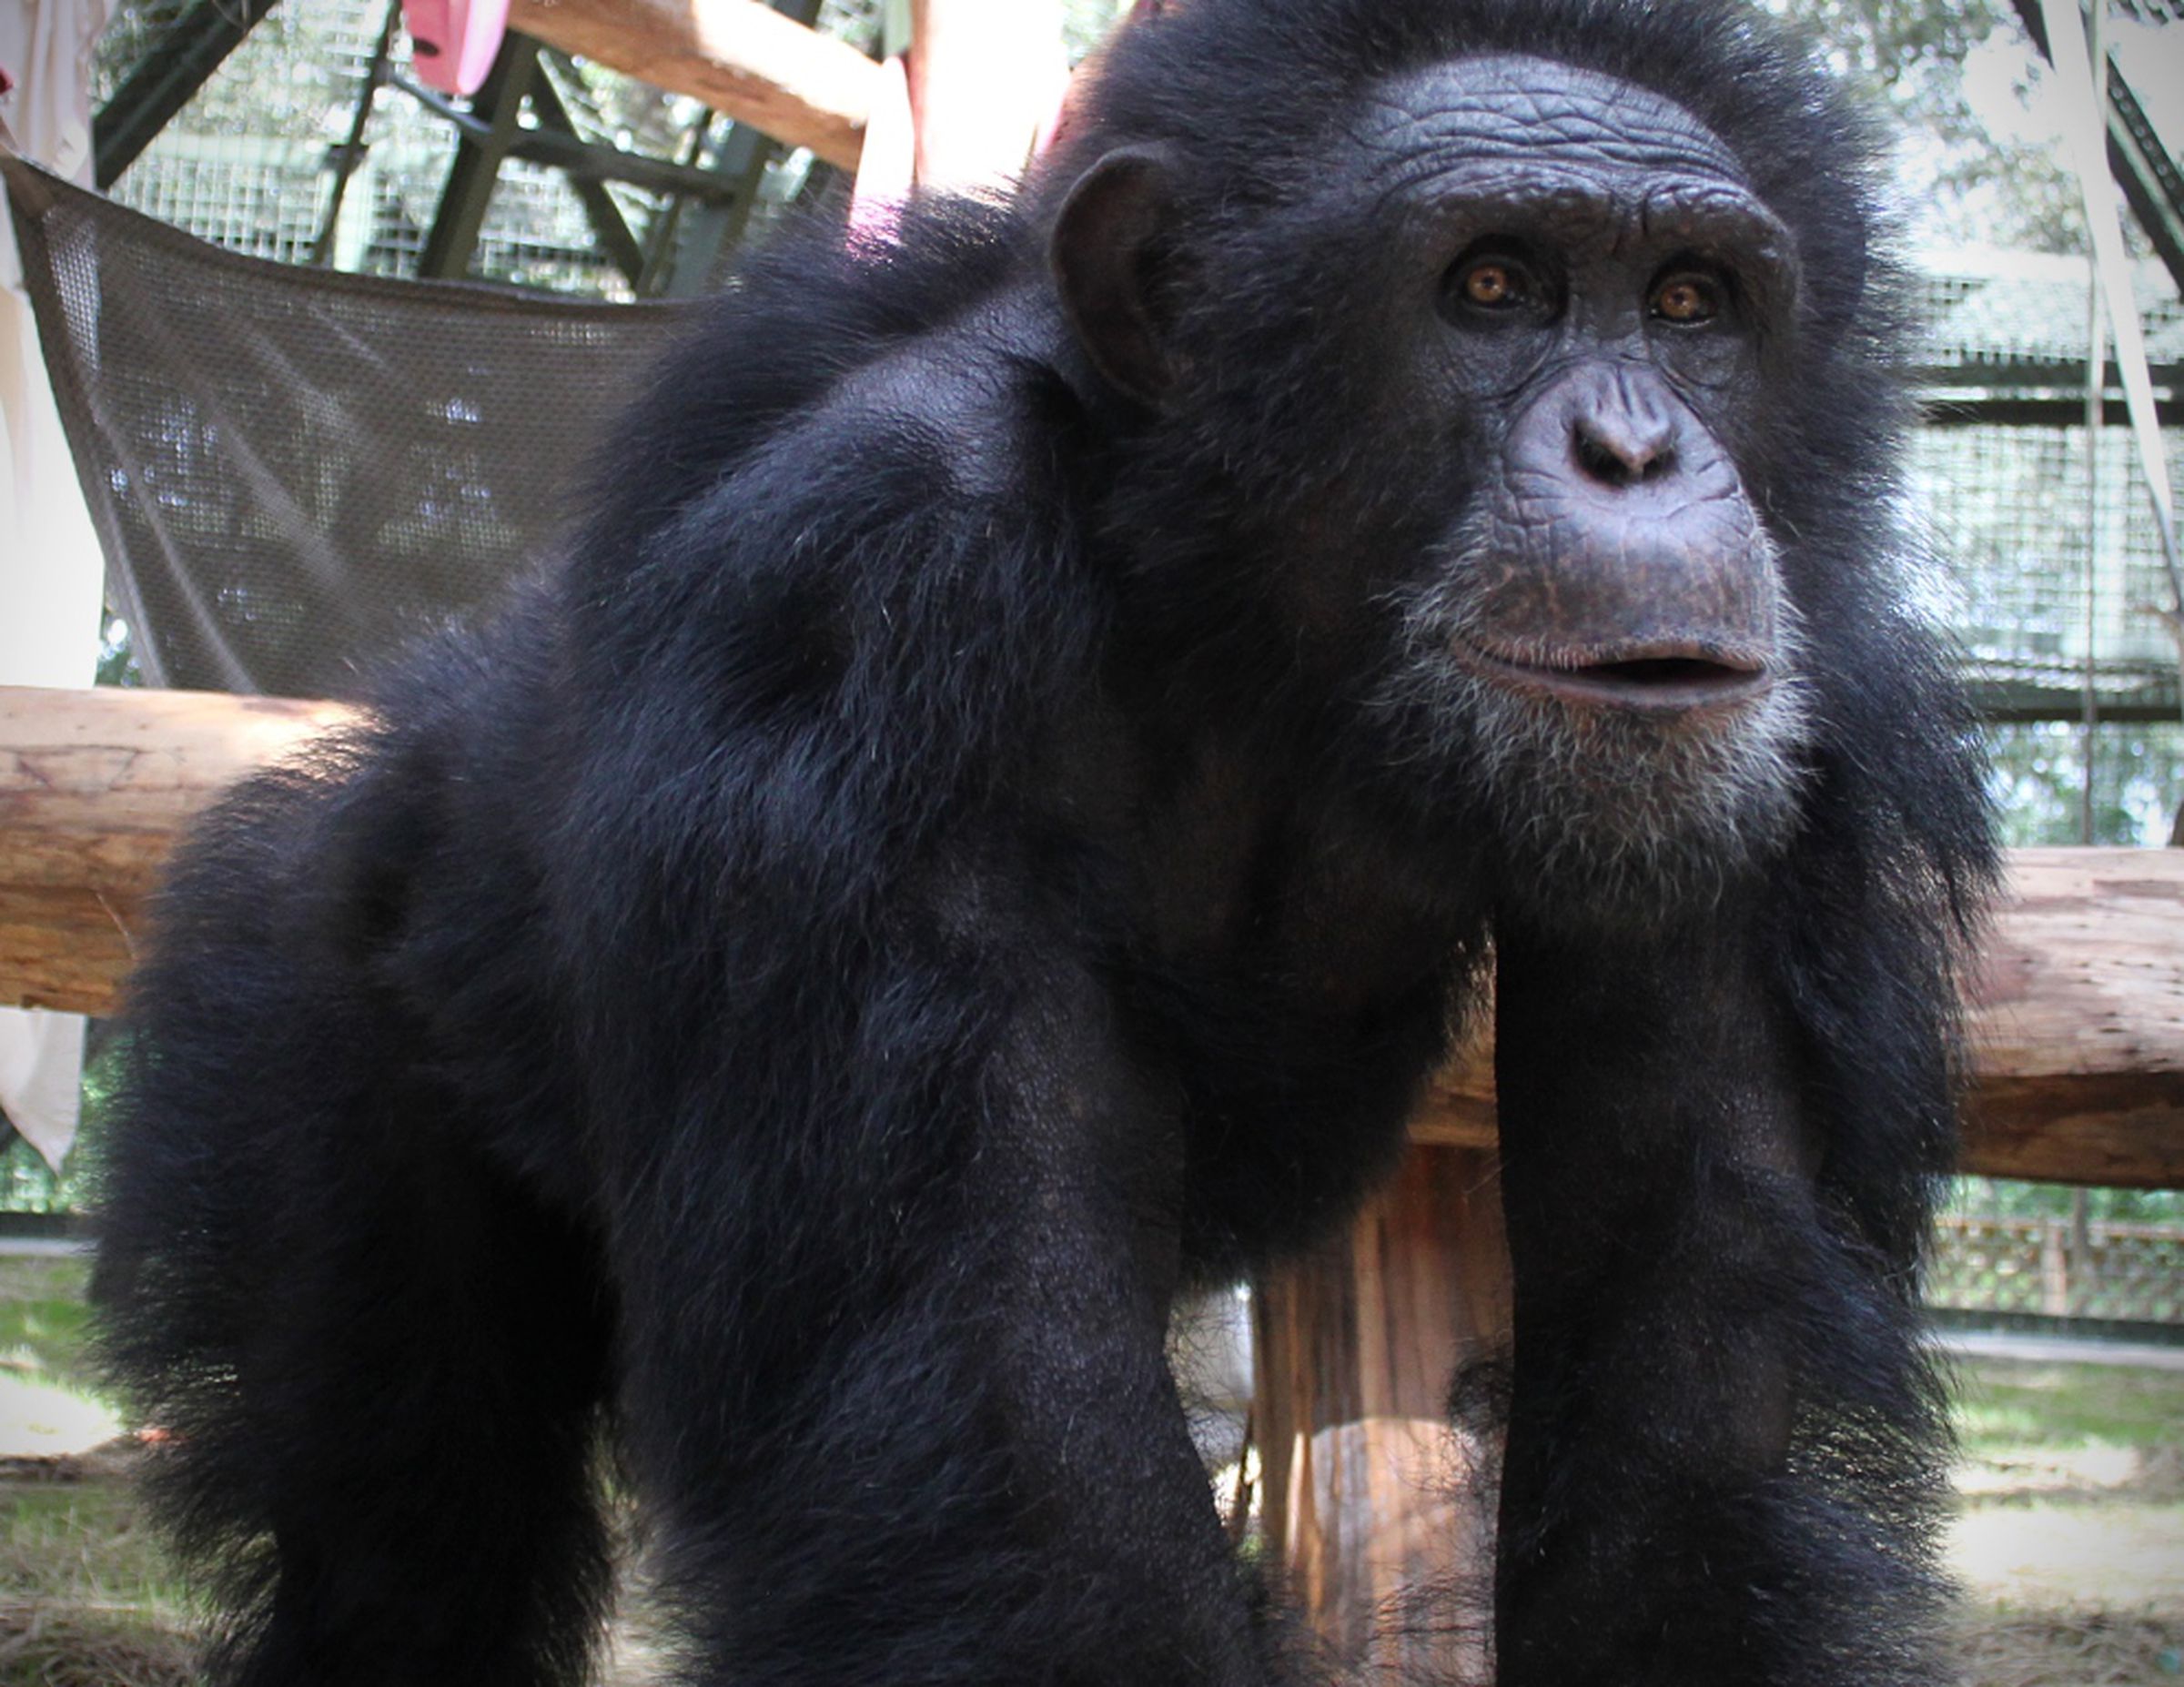 Humane Society Chimpanzee Art contestants